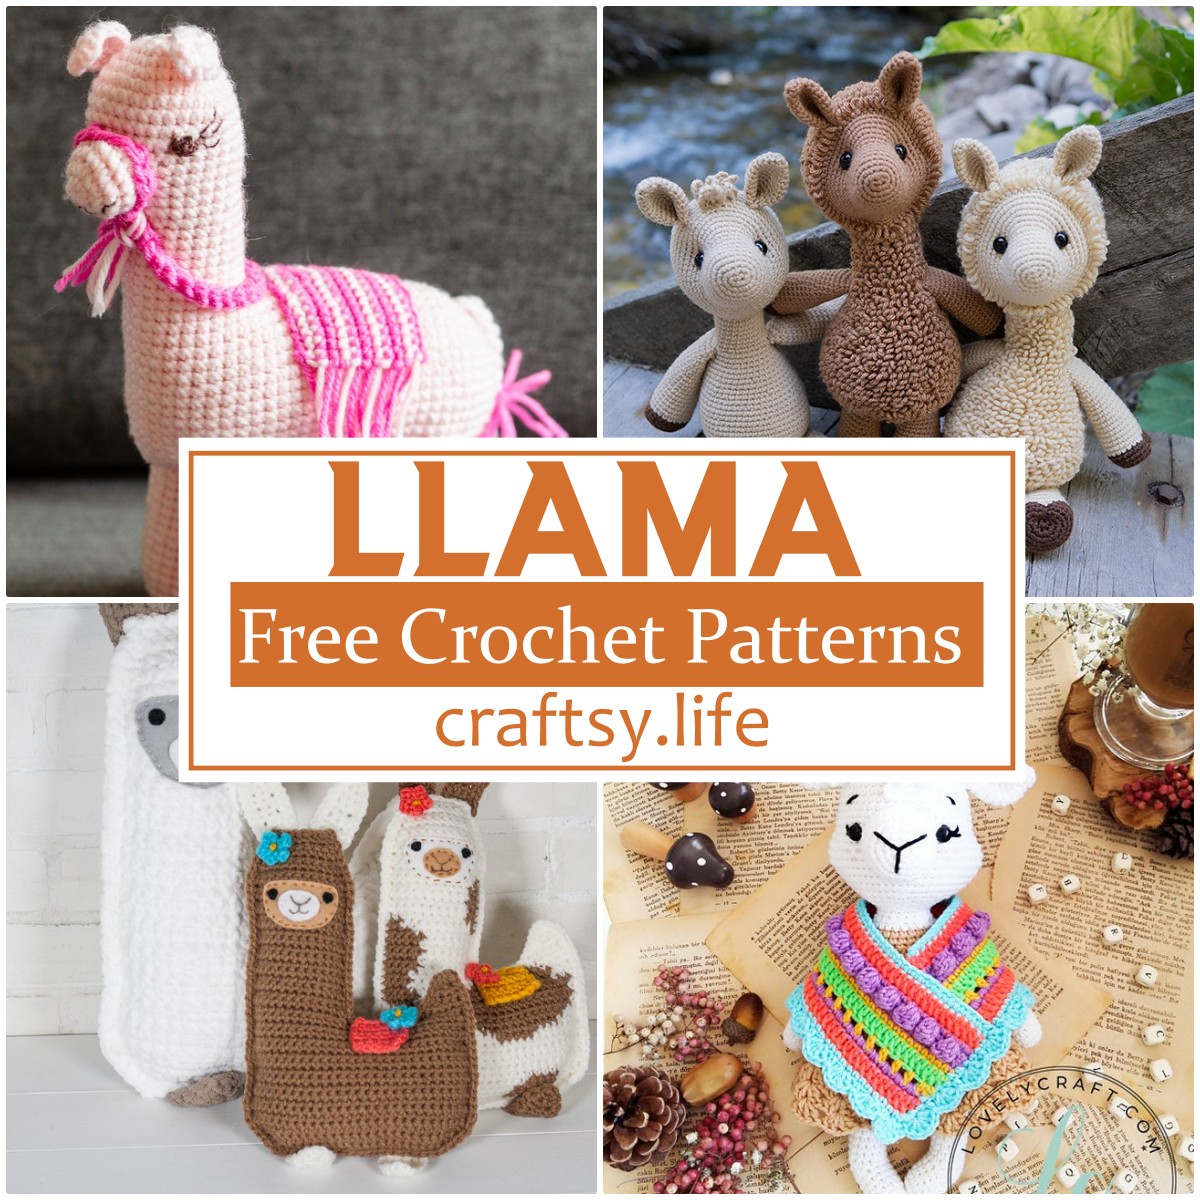 Free Crochet Llama Patterns